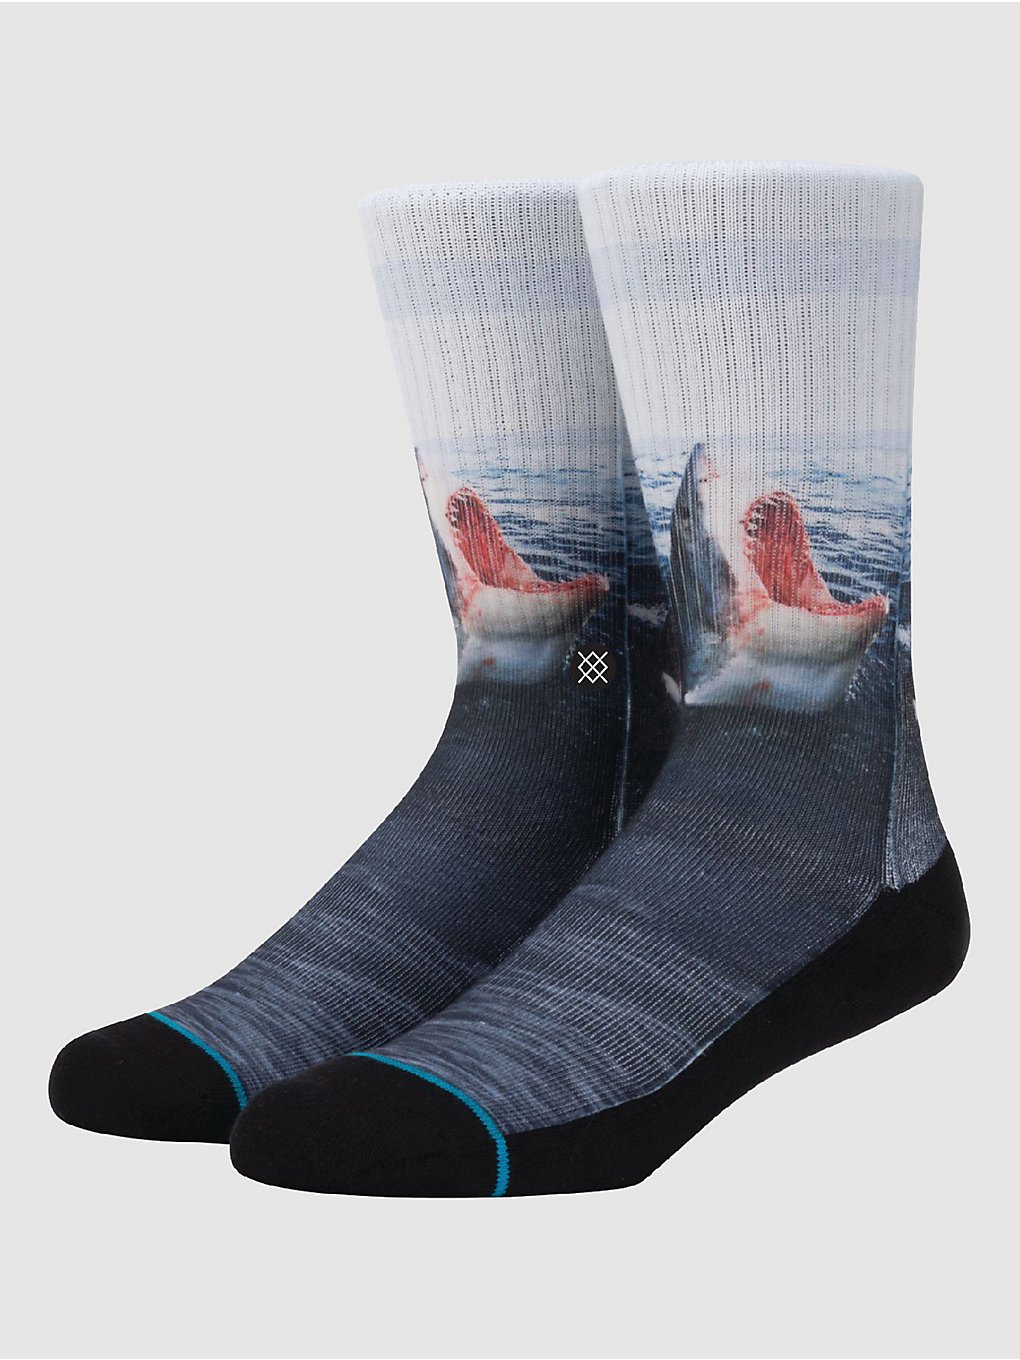 Stance Landlord Socks blue kaufen